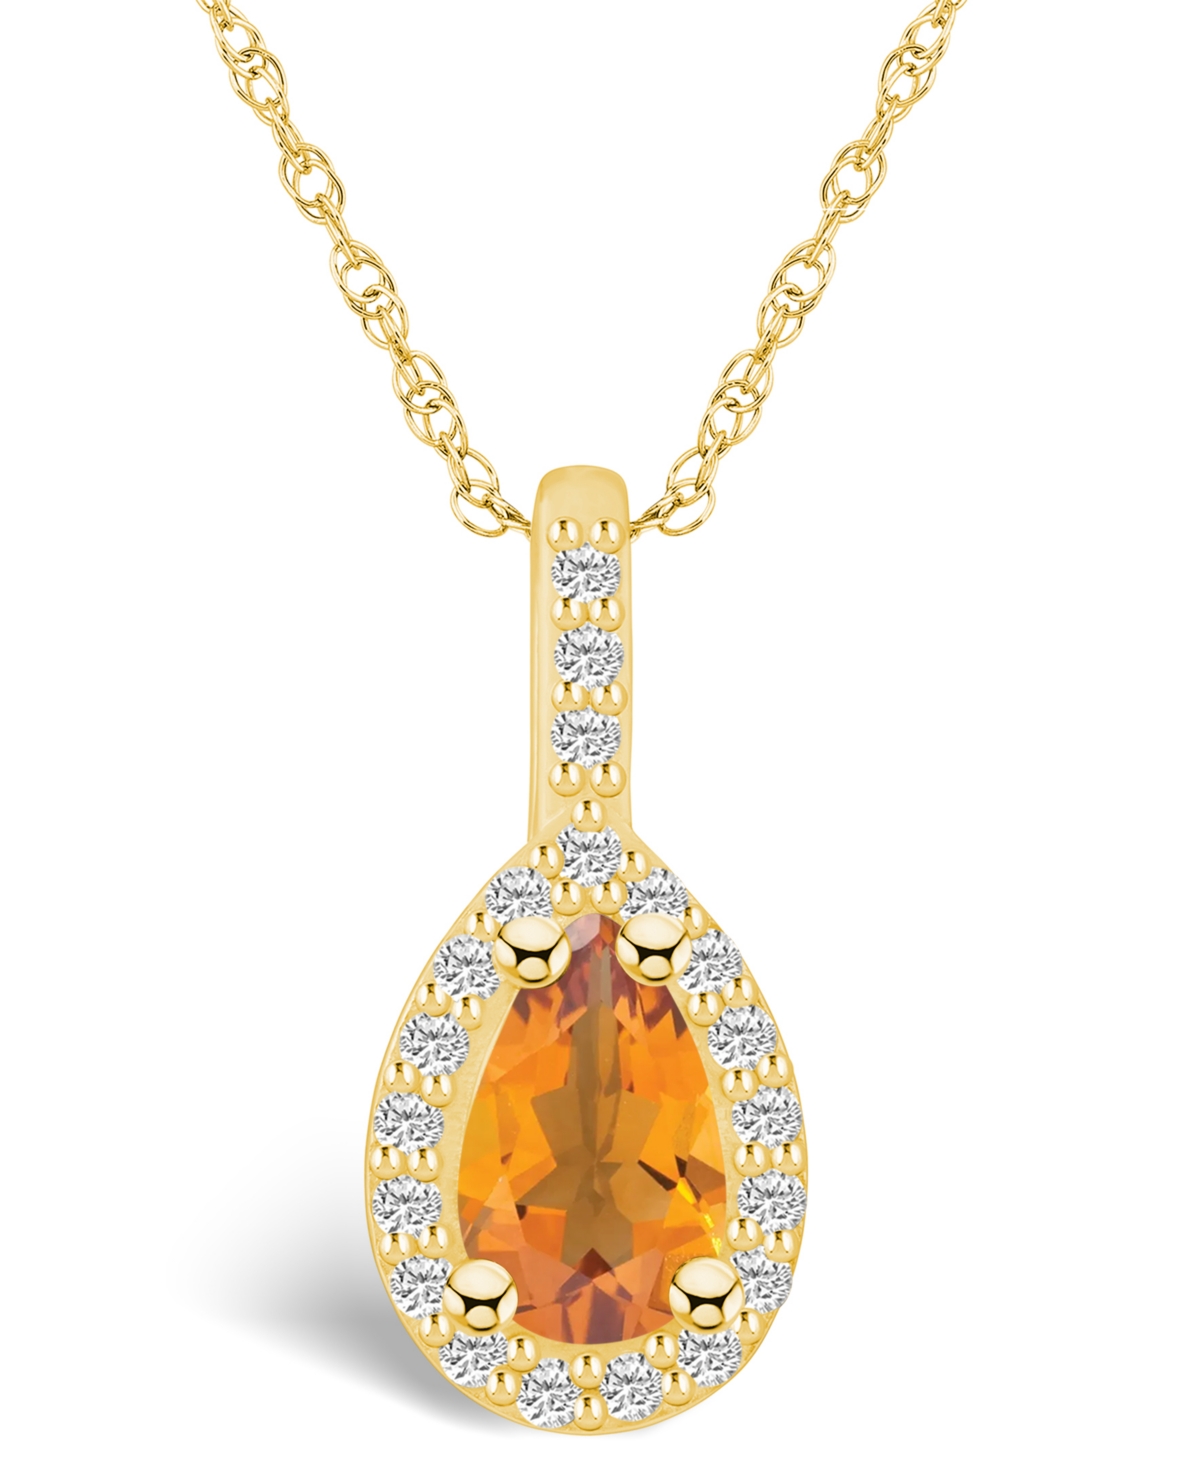 Bezel Gemstone Round Pendant Necklace - Gold Plated Chain - Turquoise  (16-24).